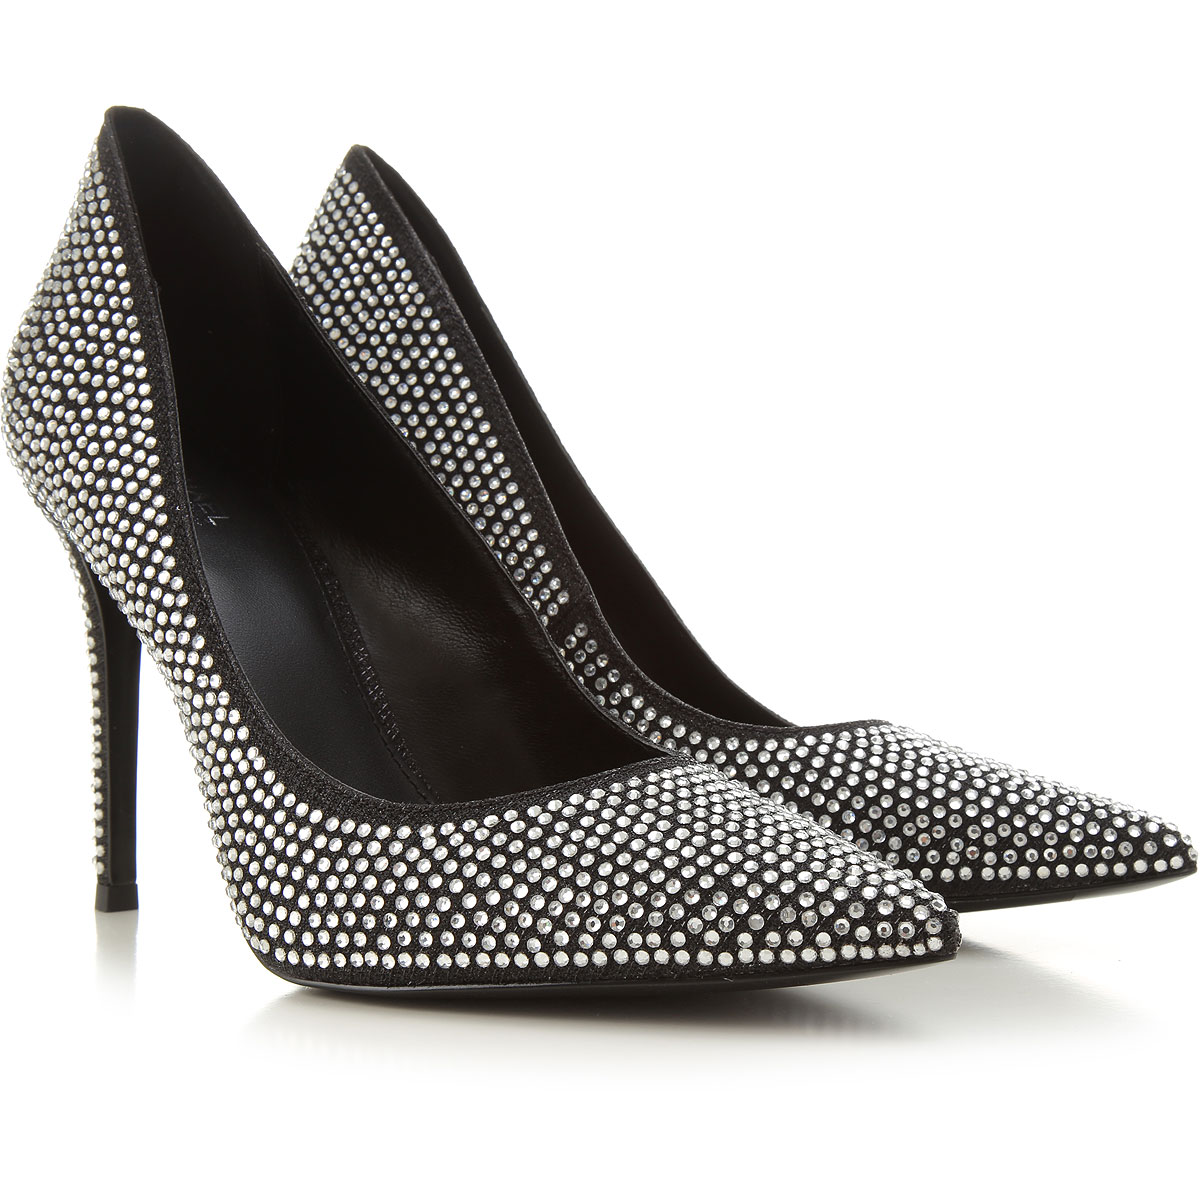 Michael Kors Pumps & High Heels for Women On Sale, Black, Leather, 2021, 6  8.5 9 | AccuWeather Shop